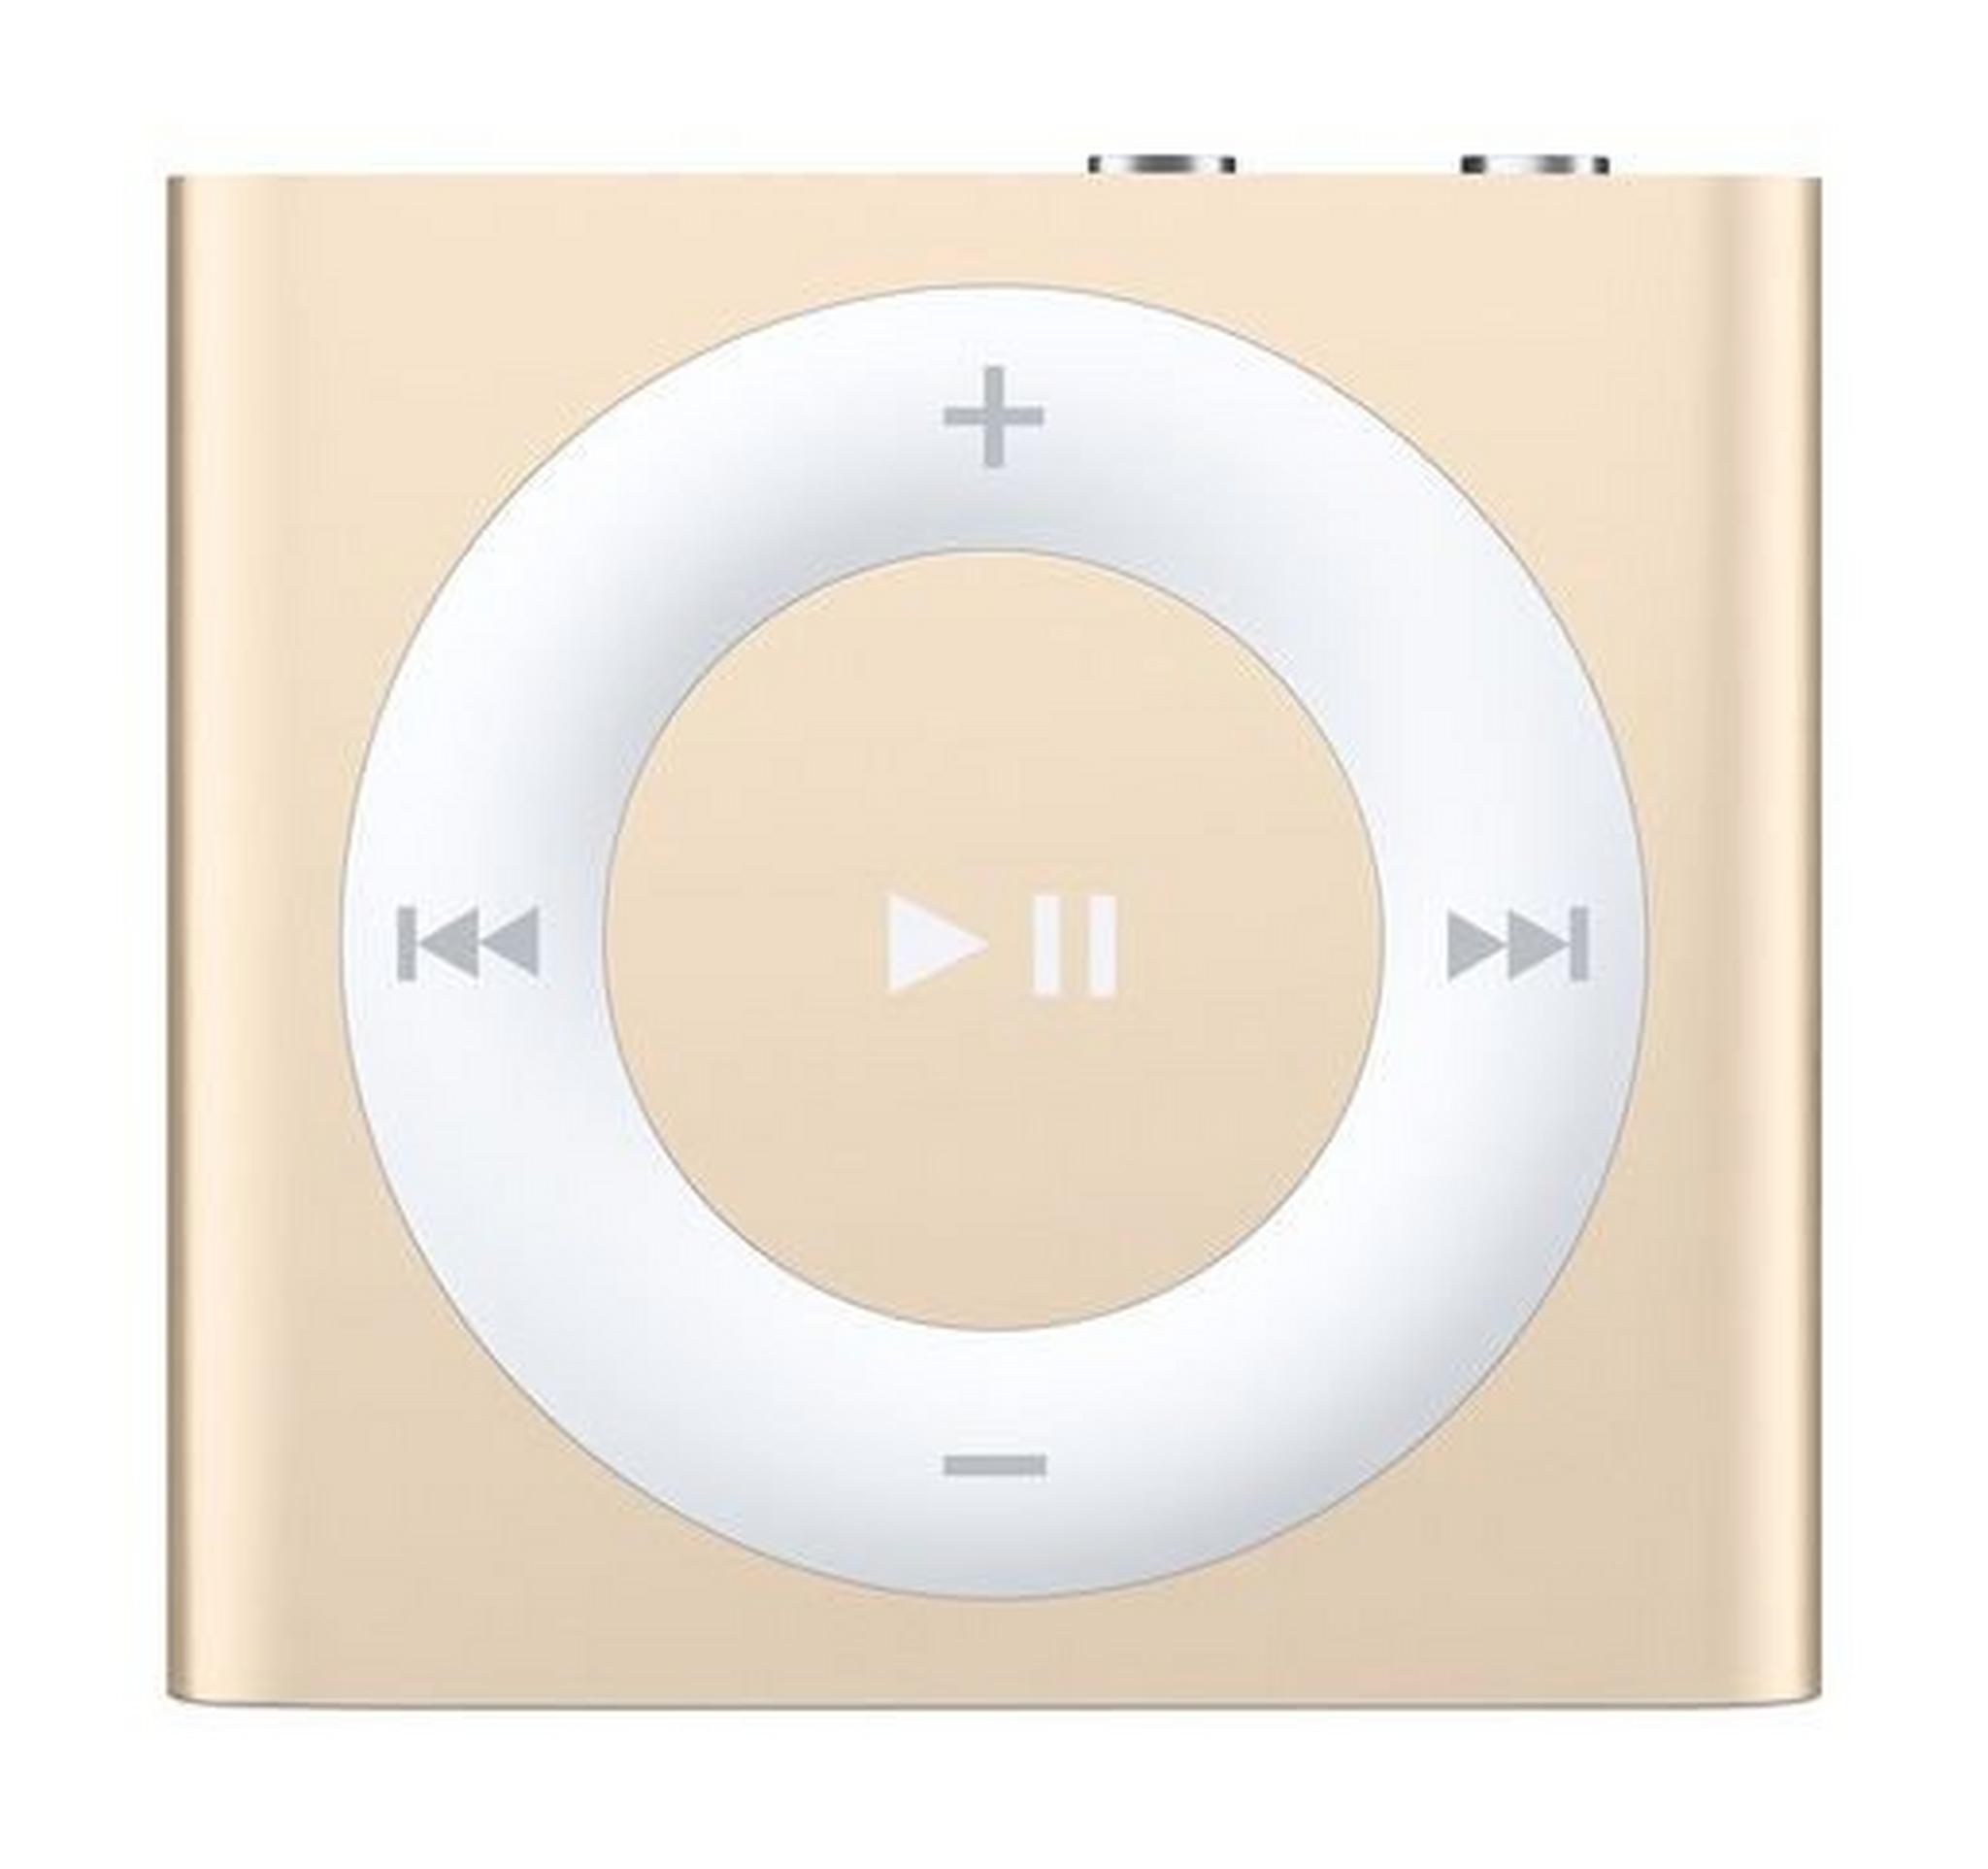 Apple iPod Shuffle 2GB 4th Gen - Gold MKM92LL/A